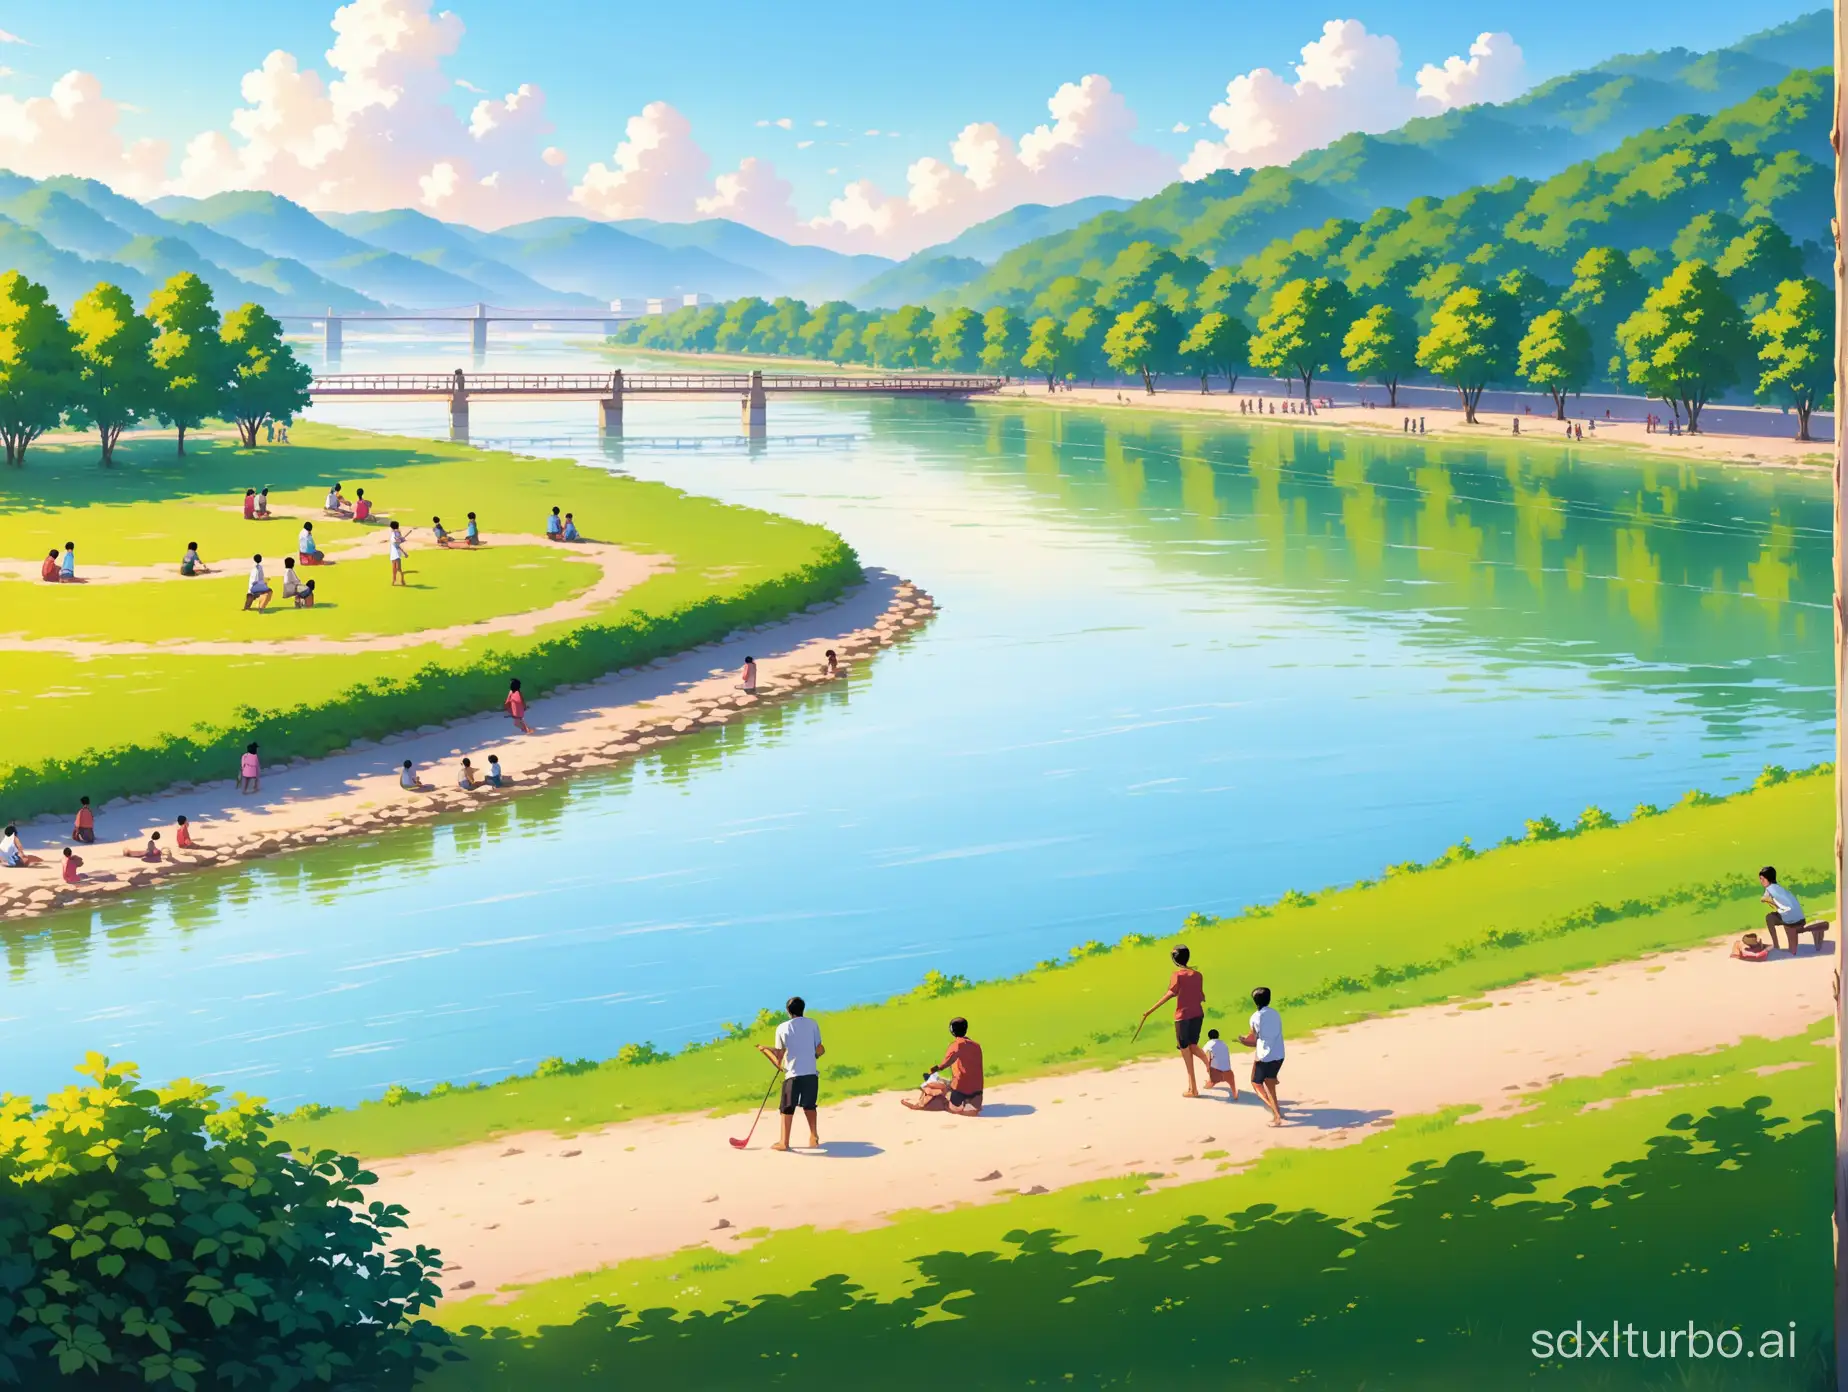 Joyful-River-Recreation-People-Enjoying-Leisure-Activities-by-the-Water